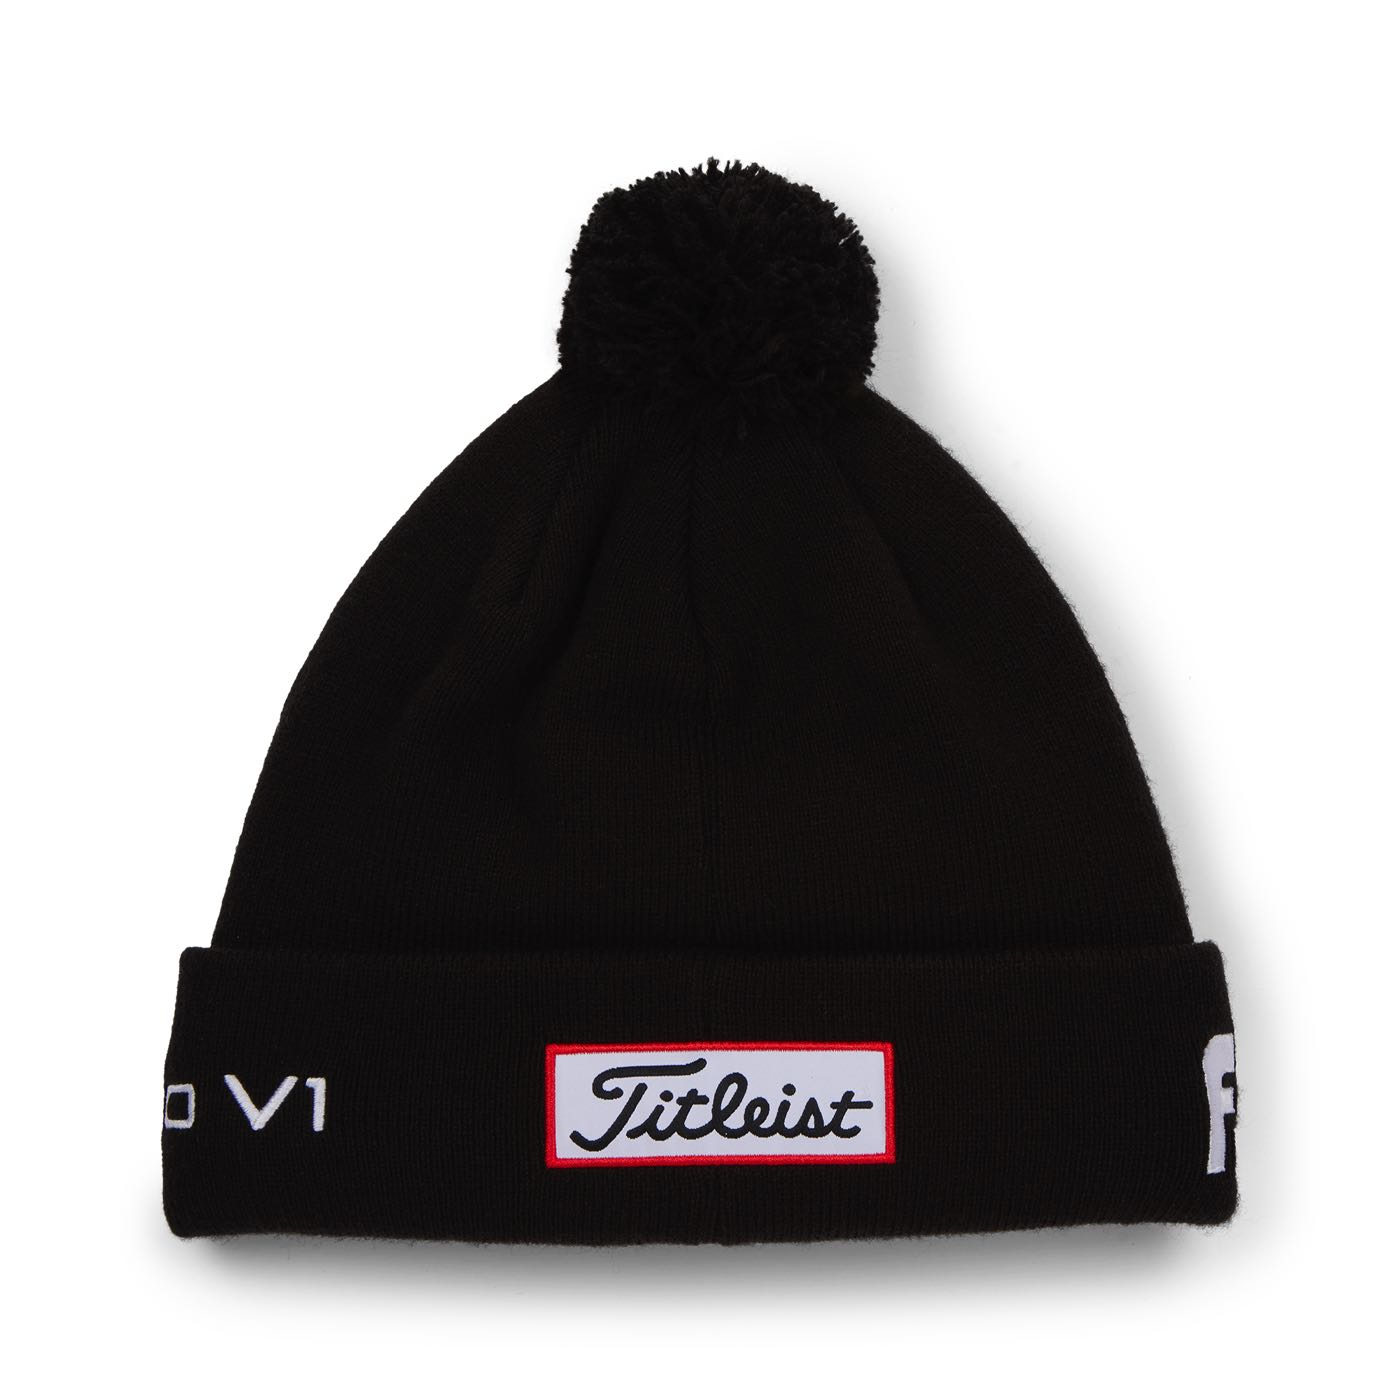 Titleist Winter Bobble Hat